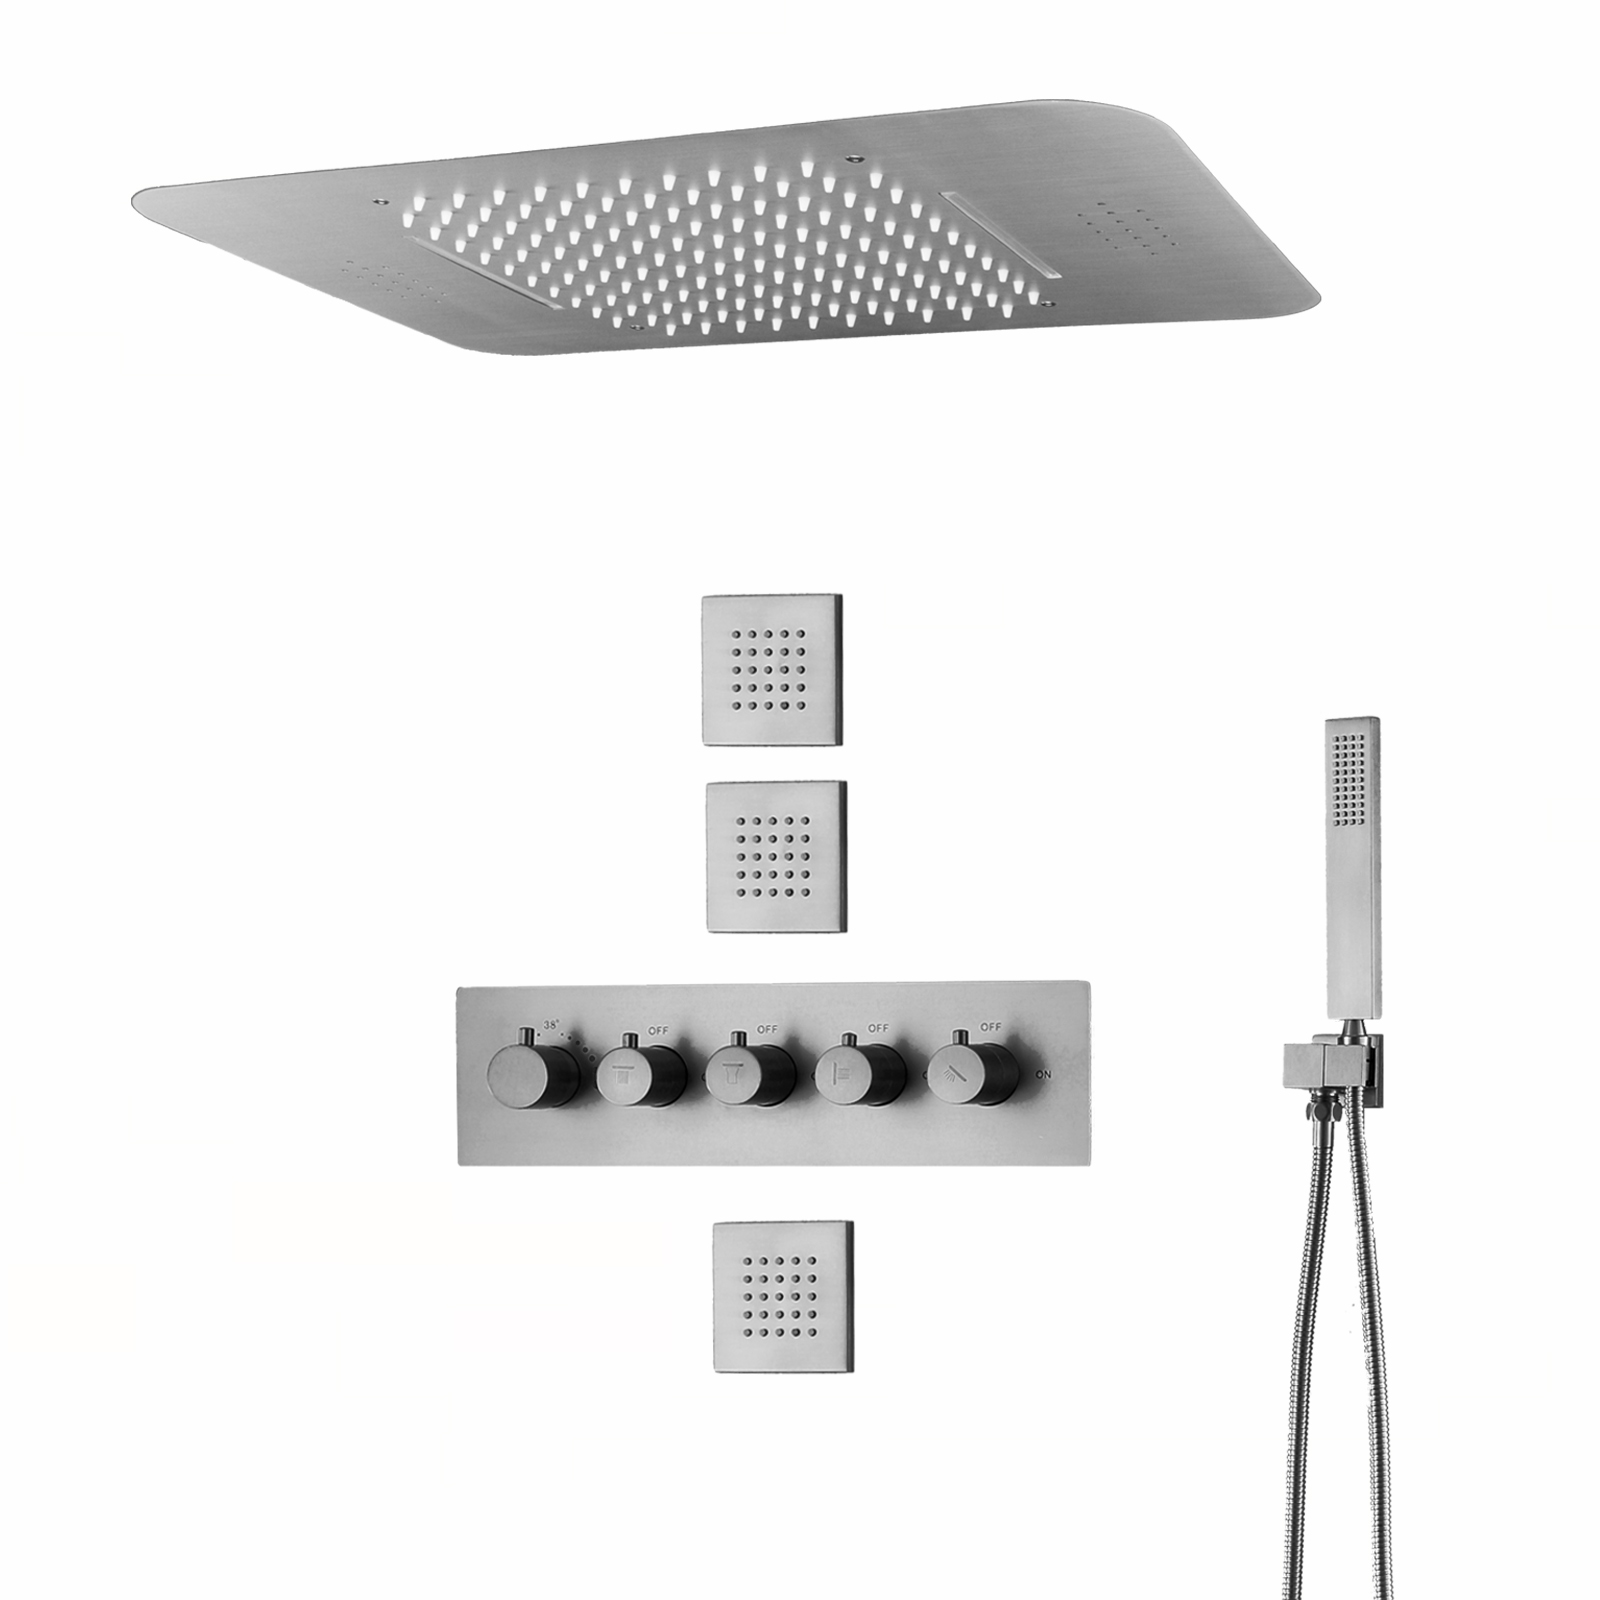 Concealed Overhead LED Music Shower Faucet Bathroom Thermostat Hidden Brass Kit Rain Shower Set